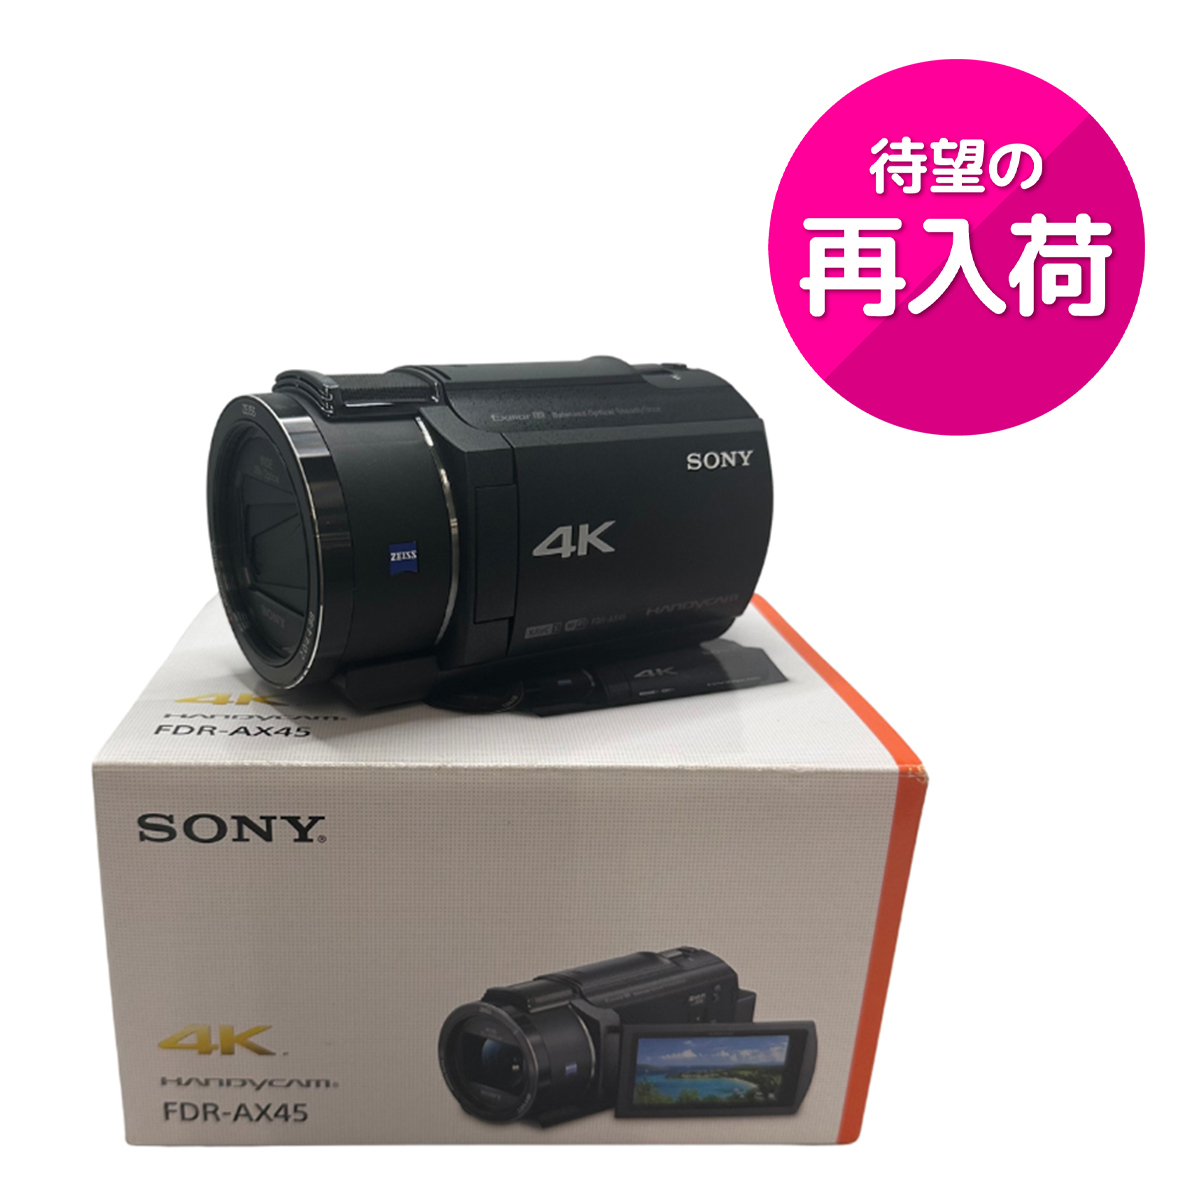 SONY ビデオカメラ FDR-AX45